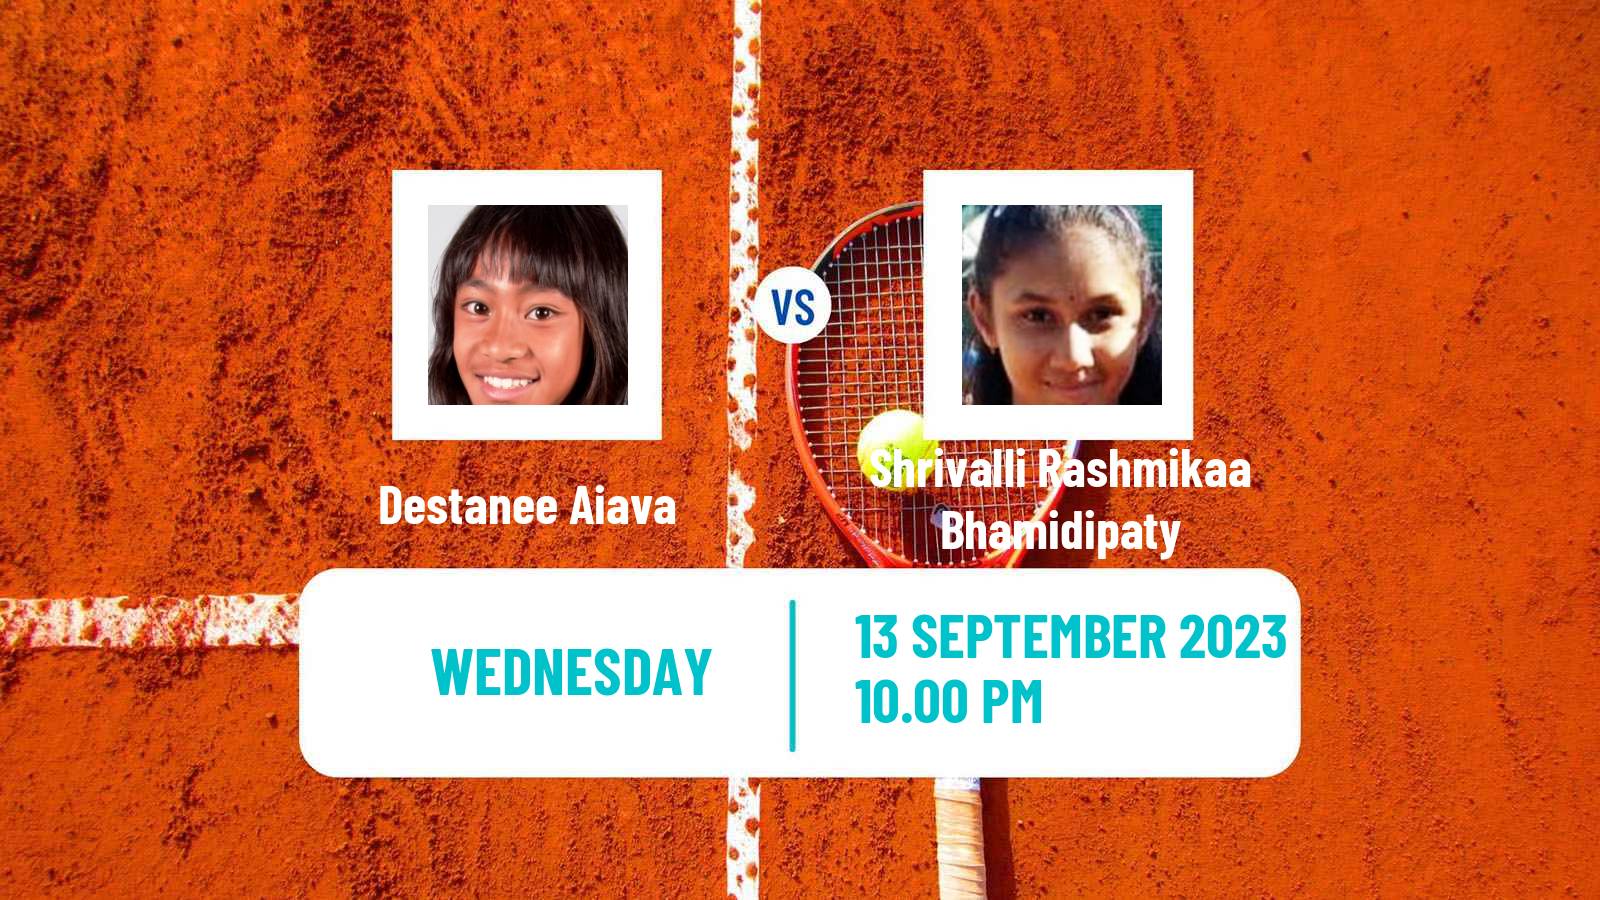 Tennis ITF W25 Perth Women Destanee Aiava - Shrivalli Rashmikaa Bhamidipaty